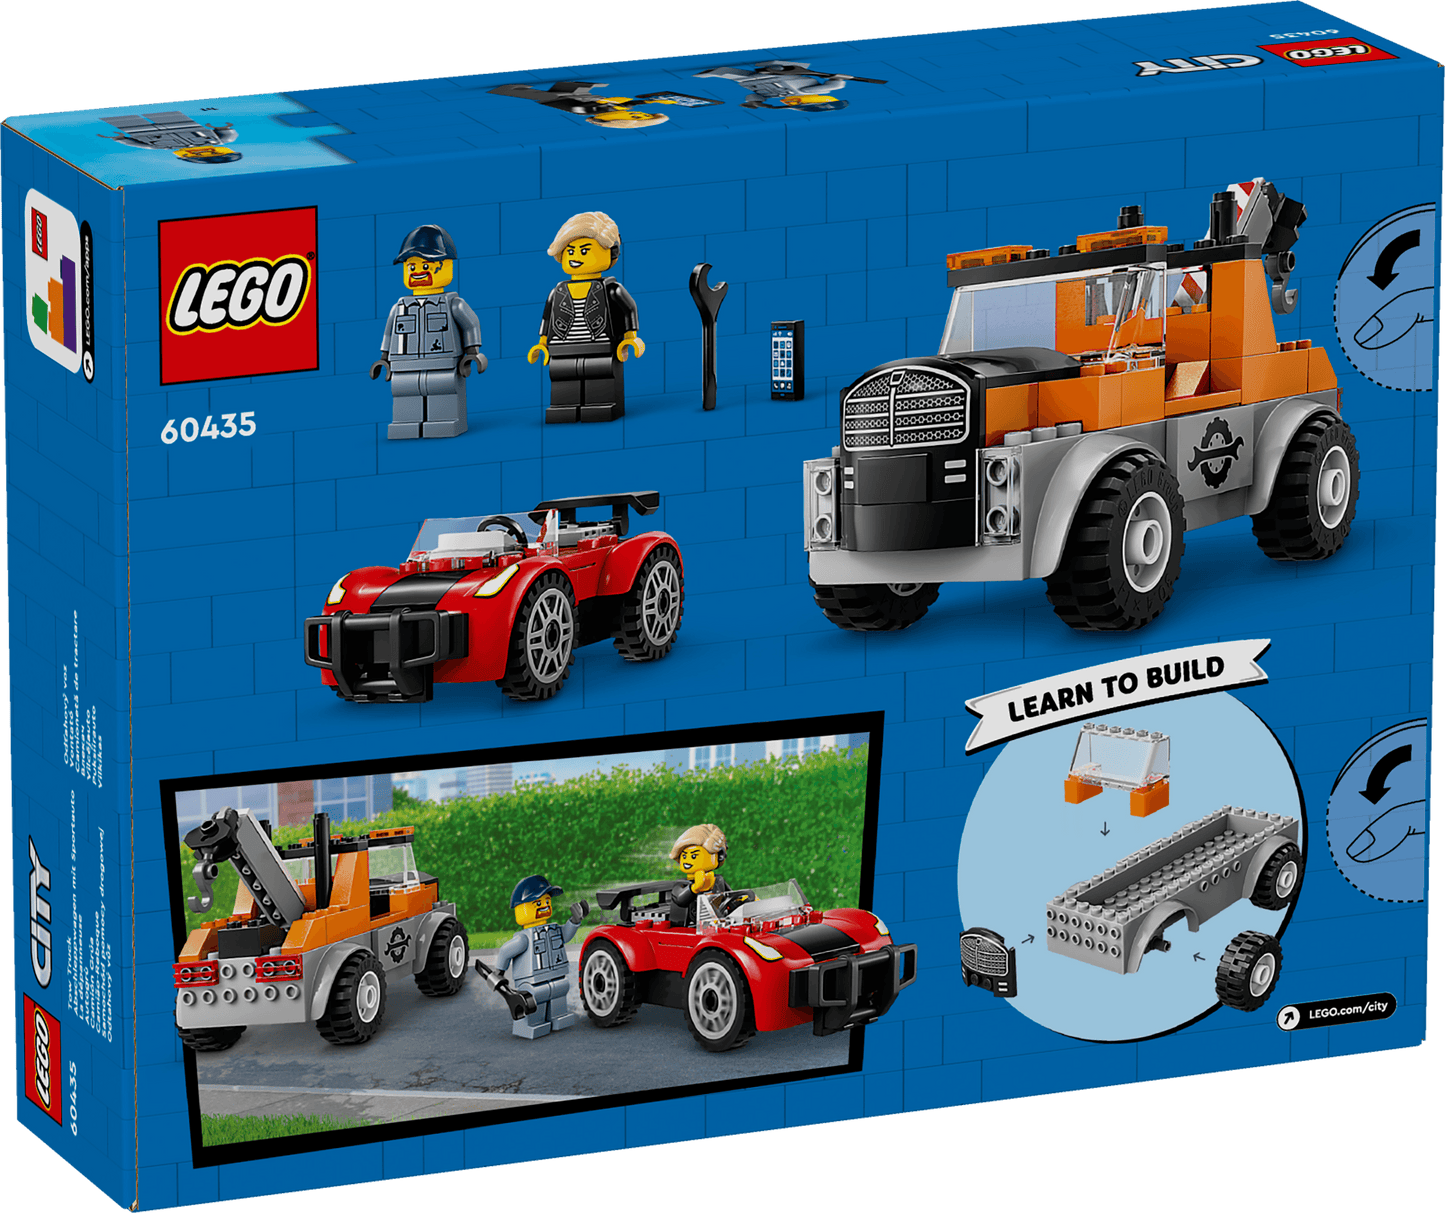 LEGO Sleepwagen en sportautoreparatie 60435 City (Pre-Order: verwacht juni) LEGO CITY @ 2TTOYS LEGO €. 16.99